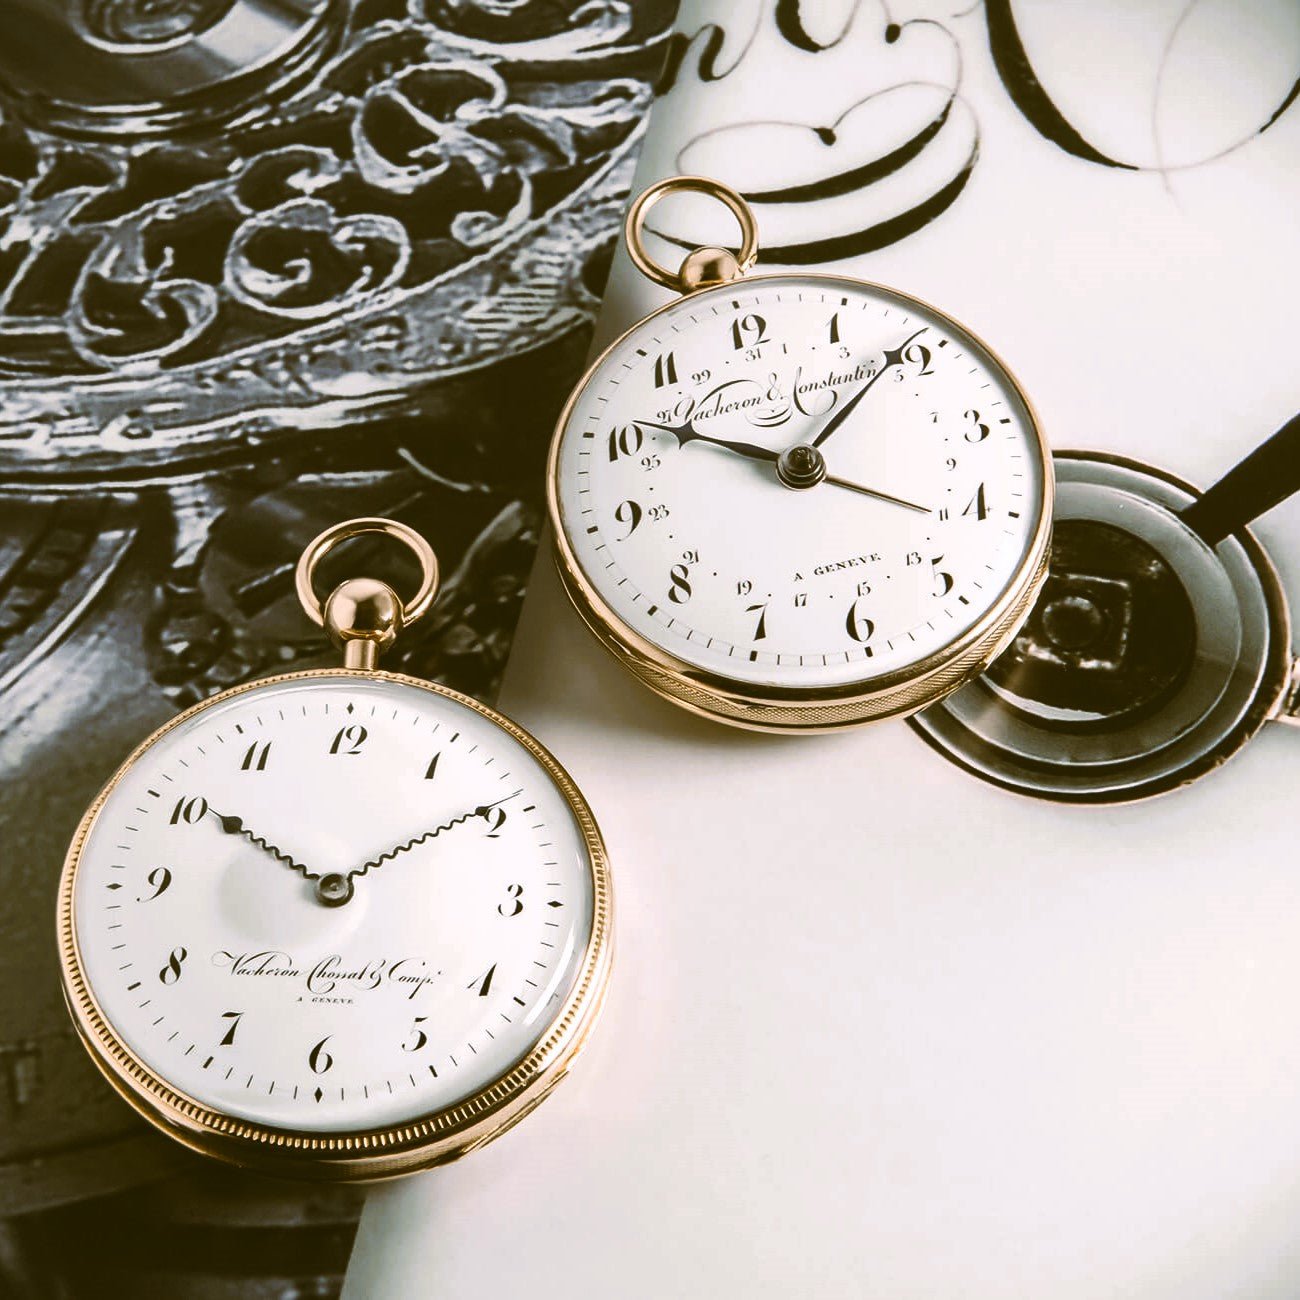 Beyond Patek Philippe: Unveiling the 5 Oldest European Watch Brands